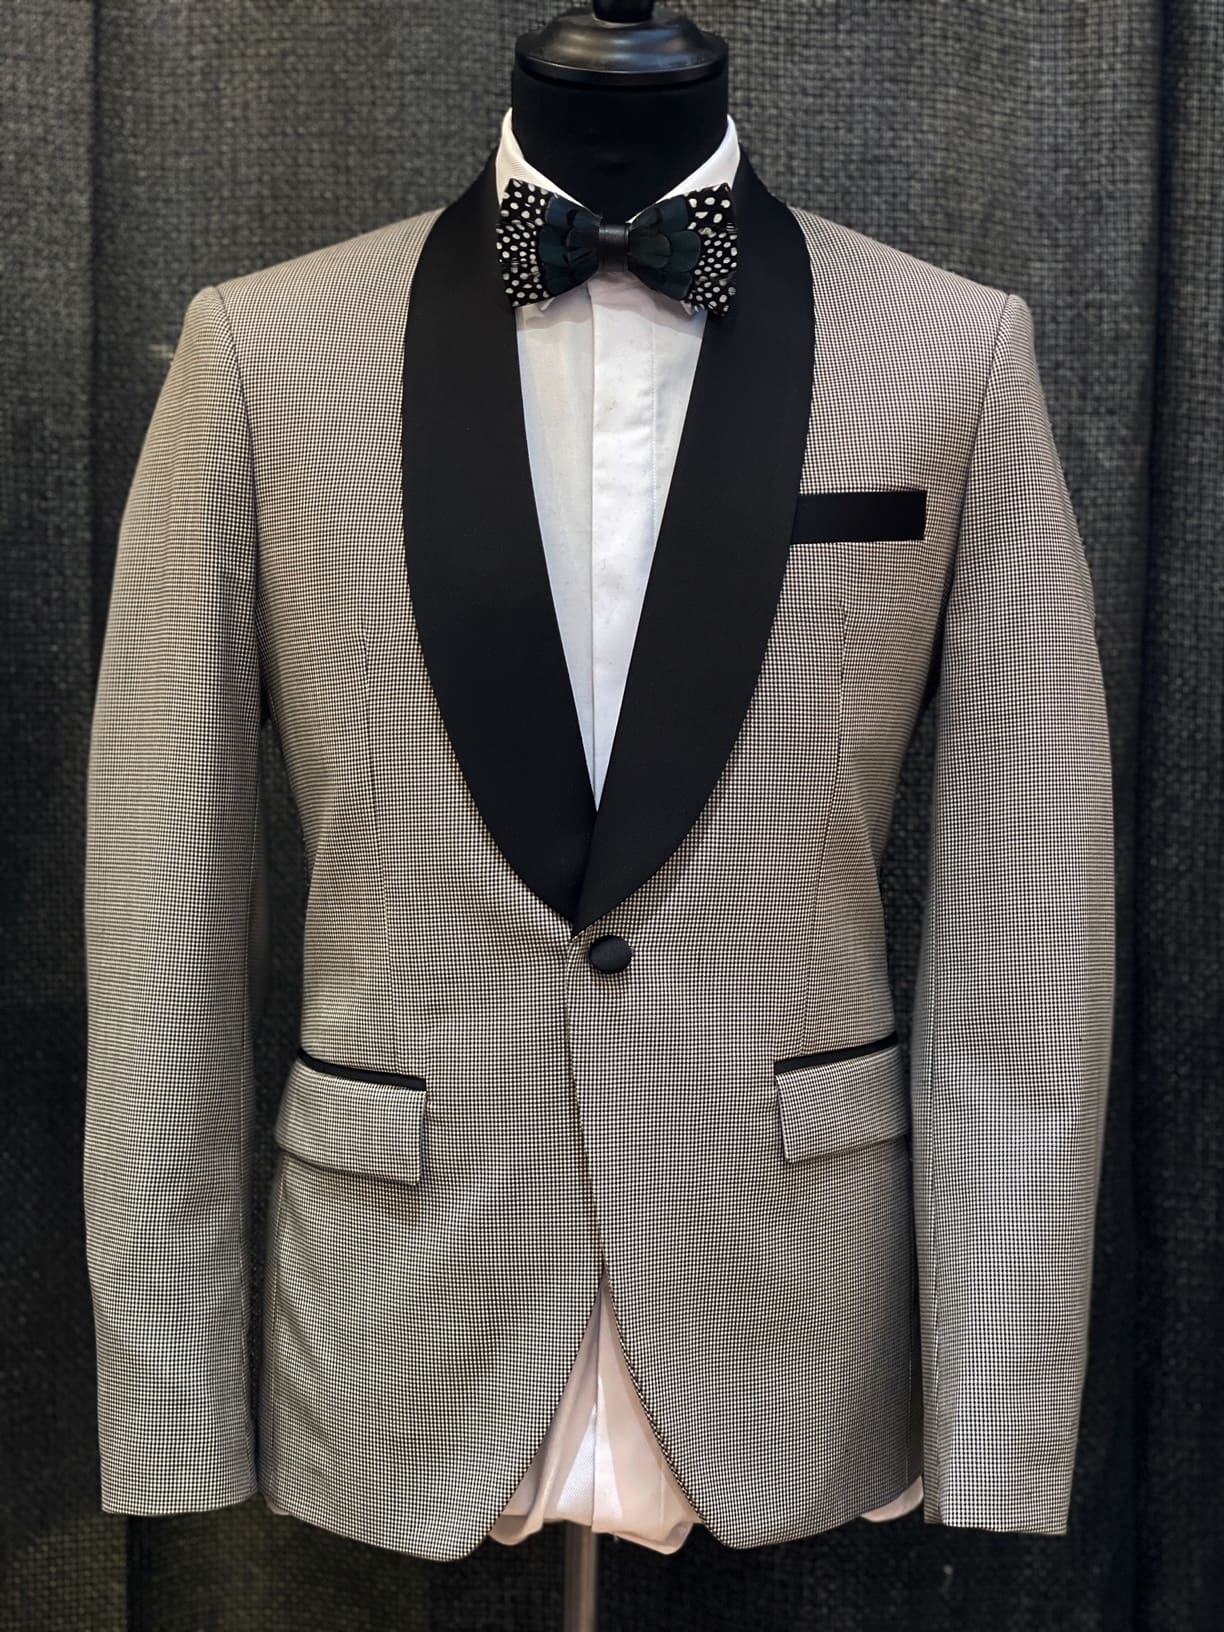 Eleganter Black-Tie Anzug